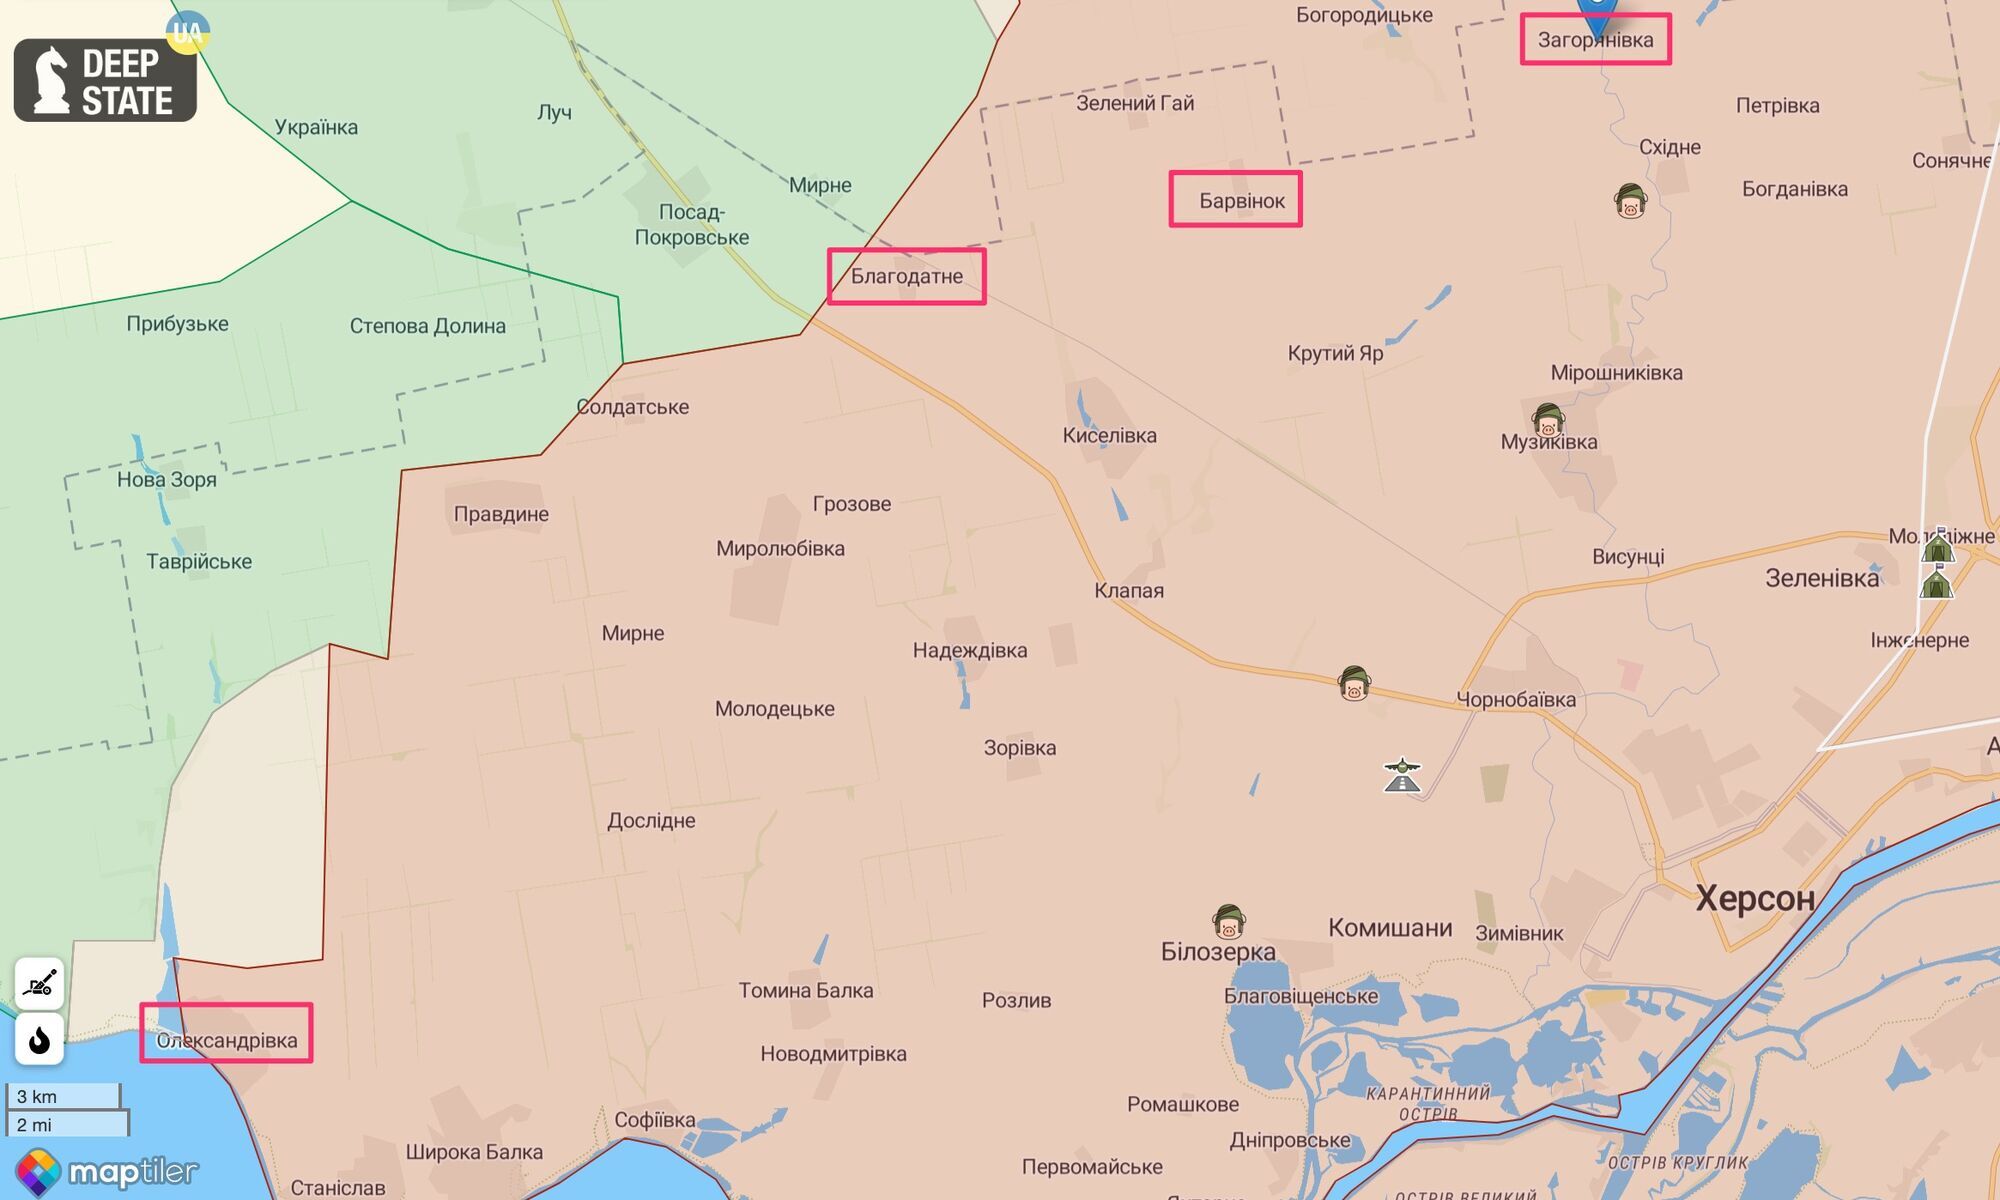 Россияне готовят укрепления по линии от Загоряновки до Александровки